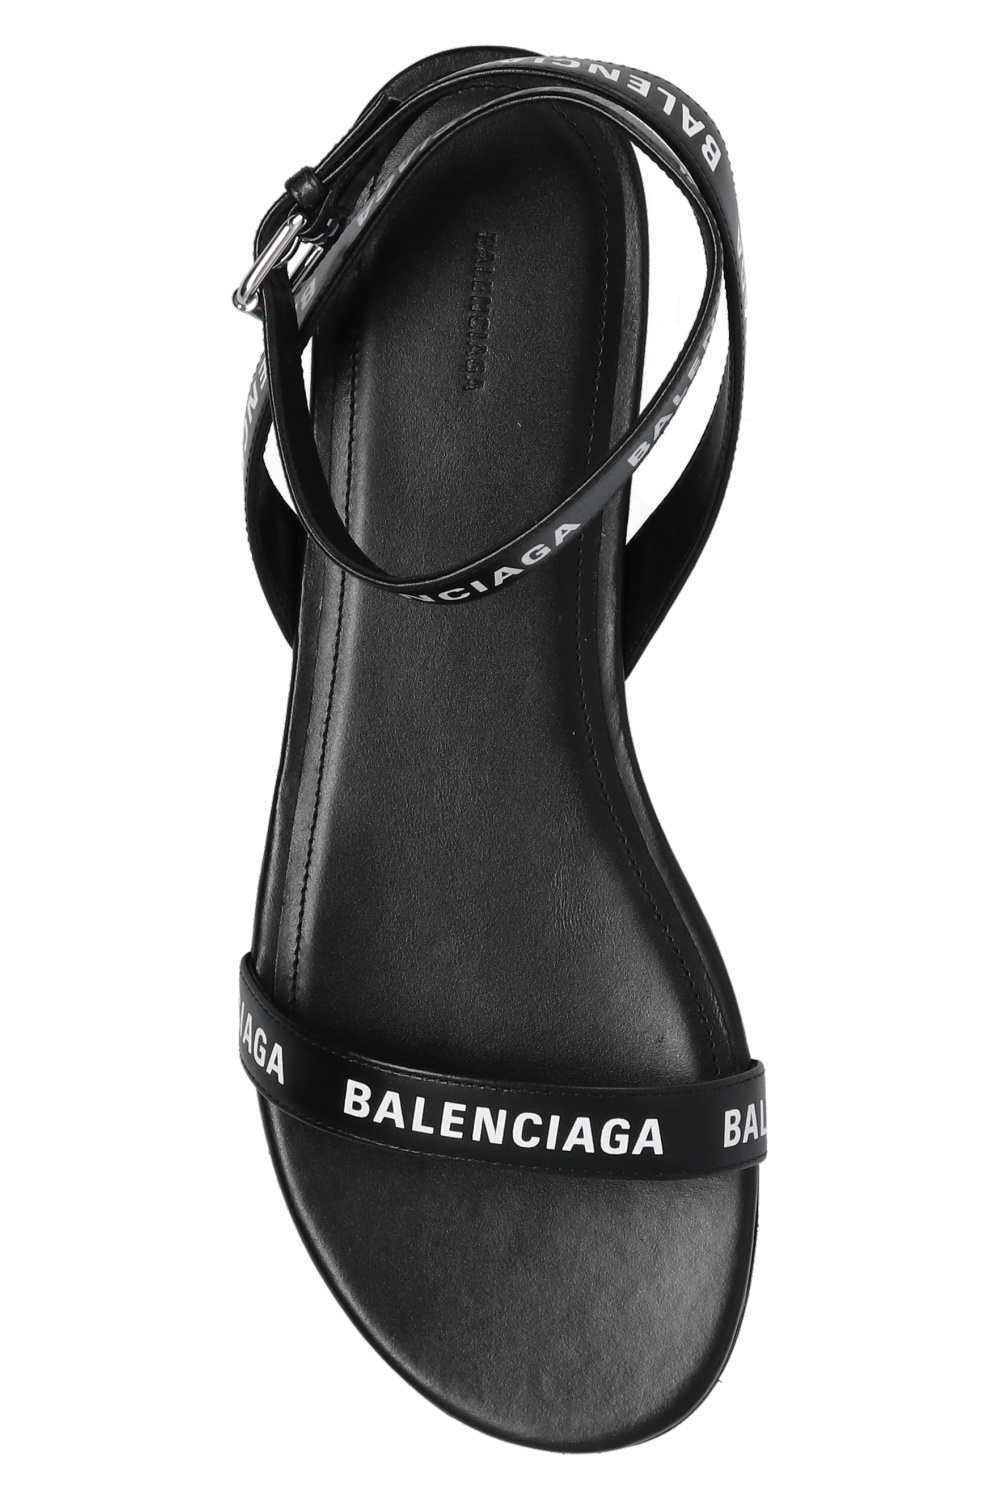 Balenciaga new balance lindor signature turf mens turf shoes white red tlindwc